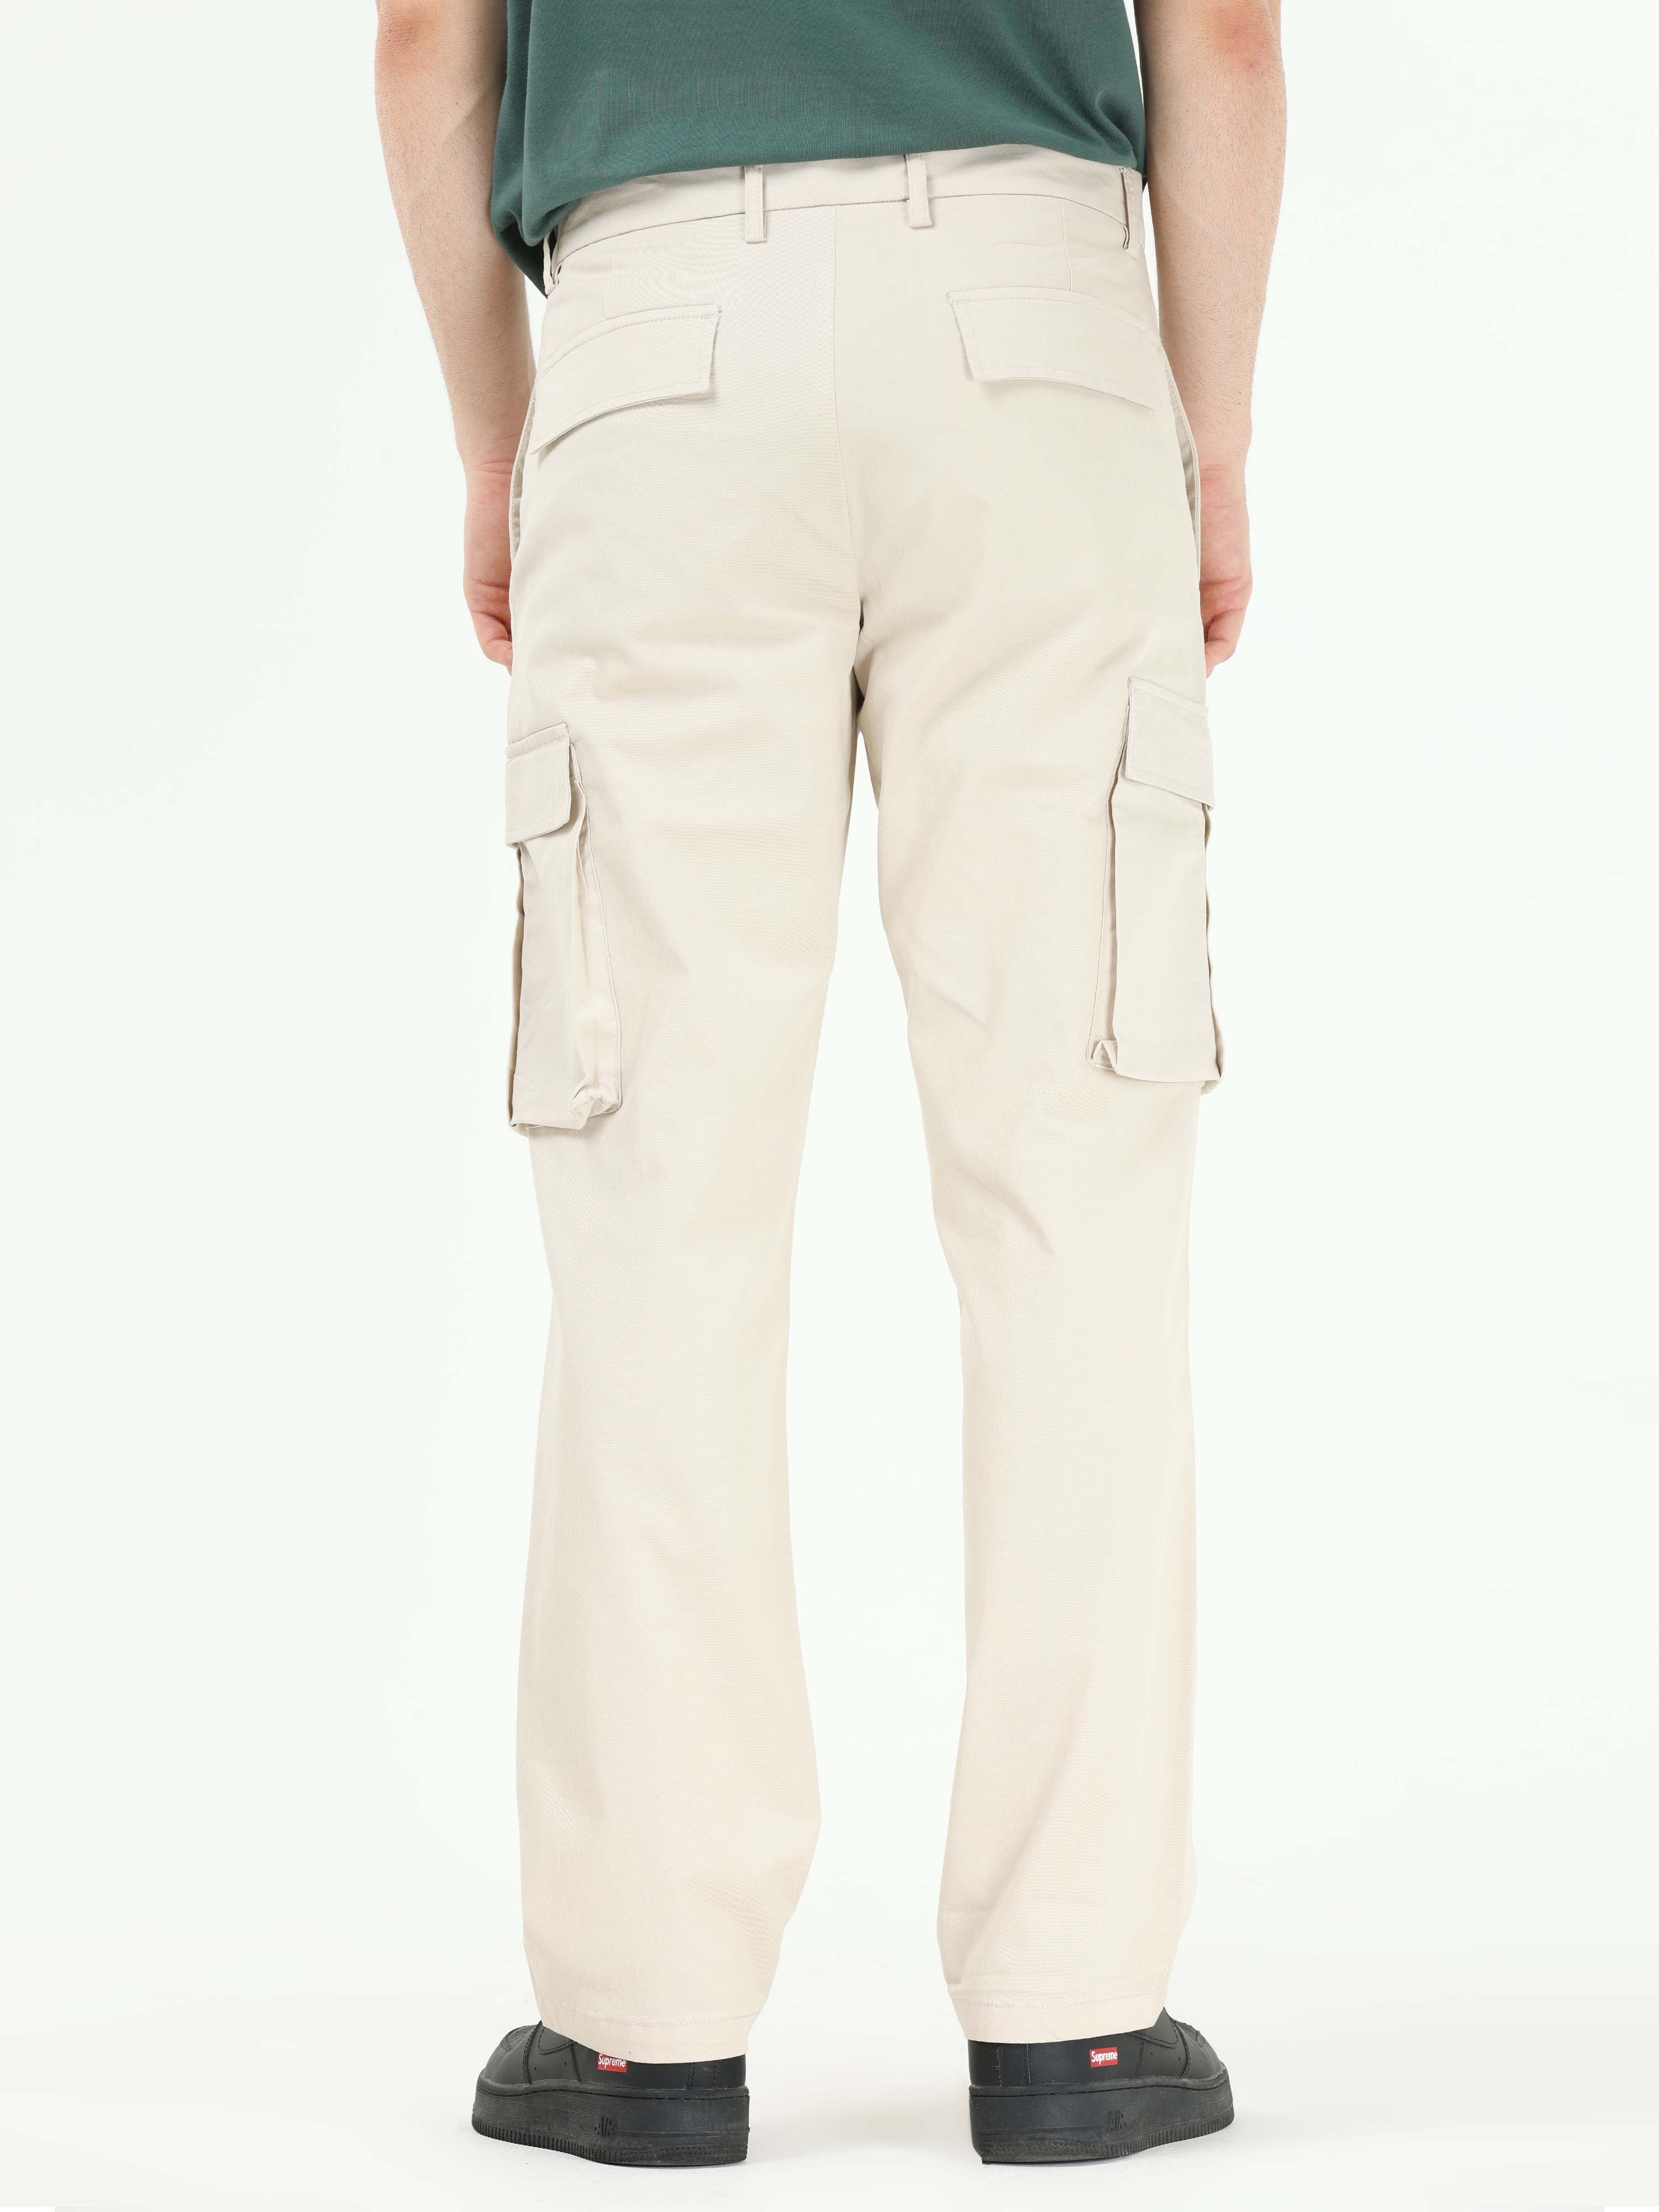 PIKADINGNIS Men's Baggy Cargo Pants Casual Loose Fit Elastic Waist Cotton  Twill Cargo Pants - Walmart.com